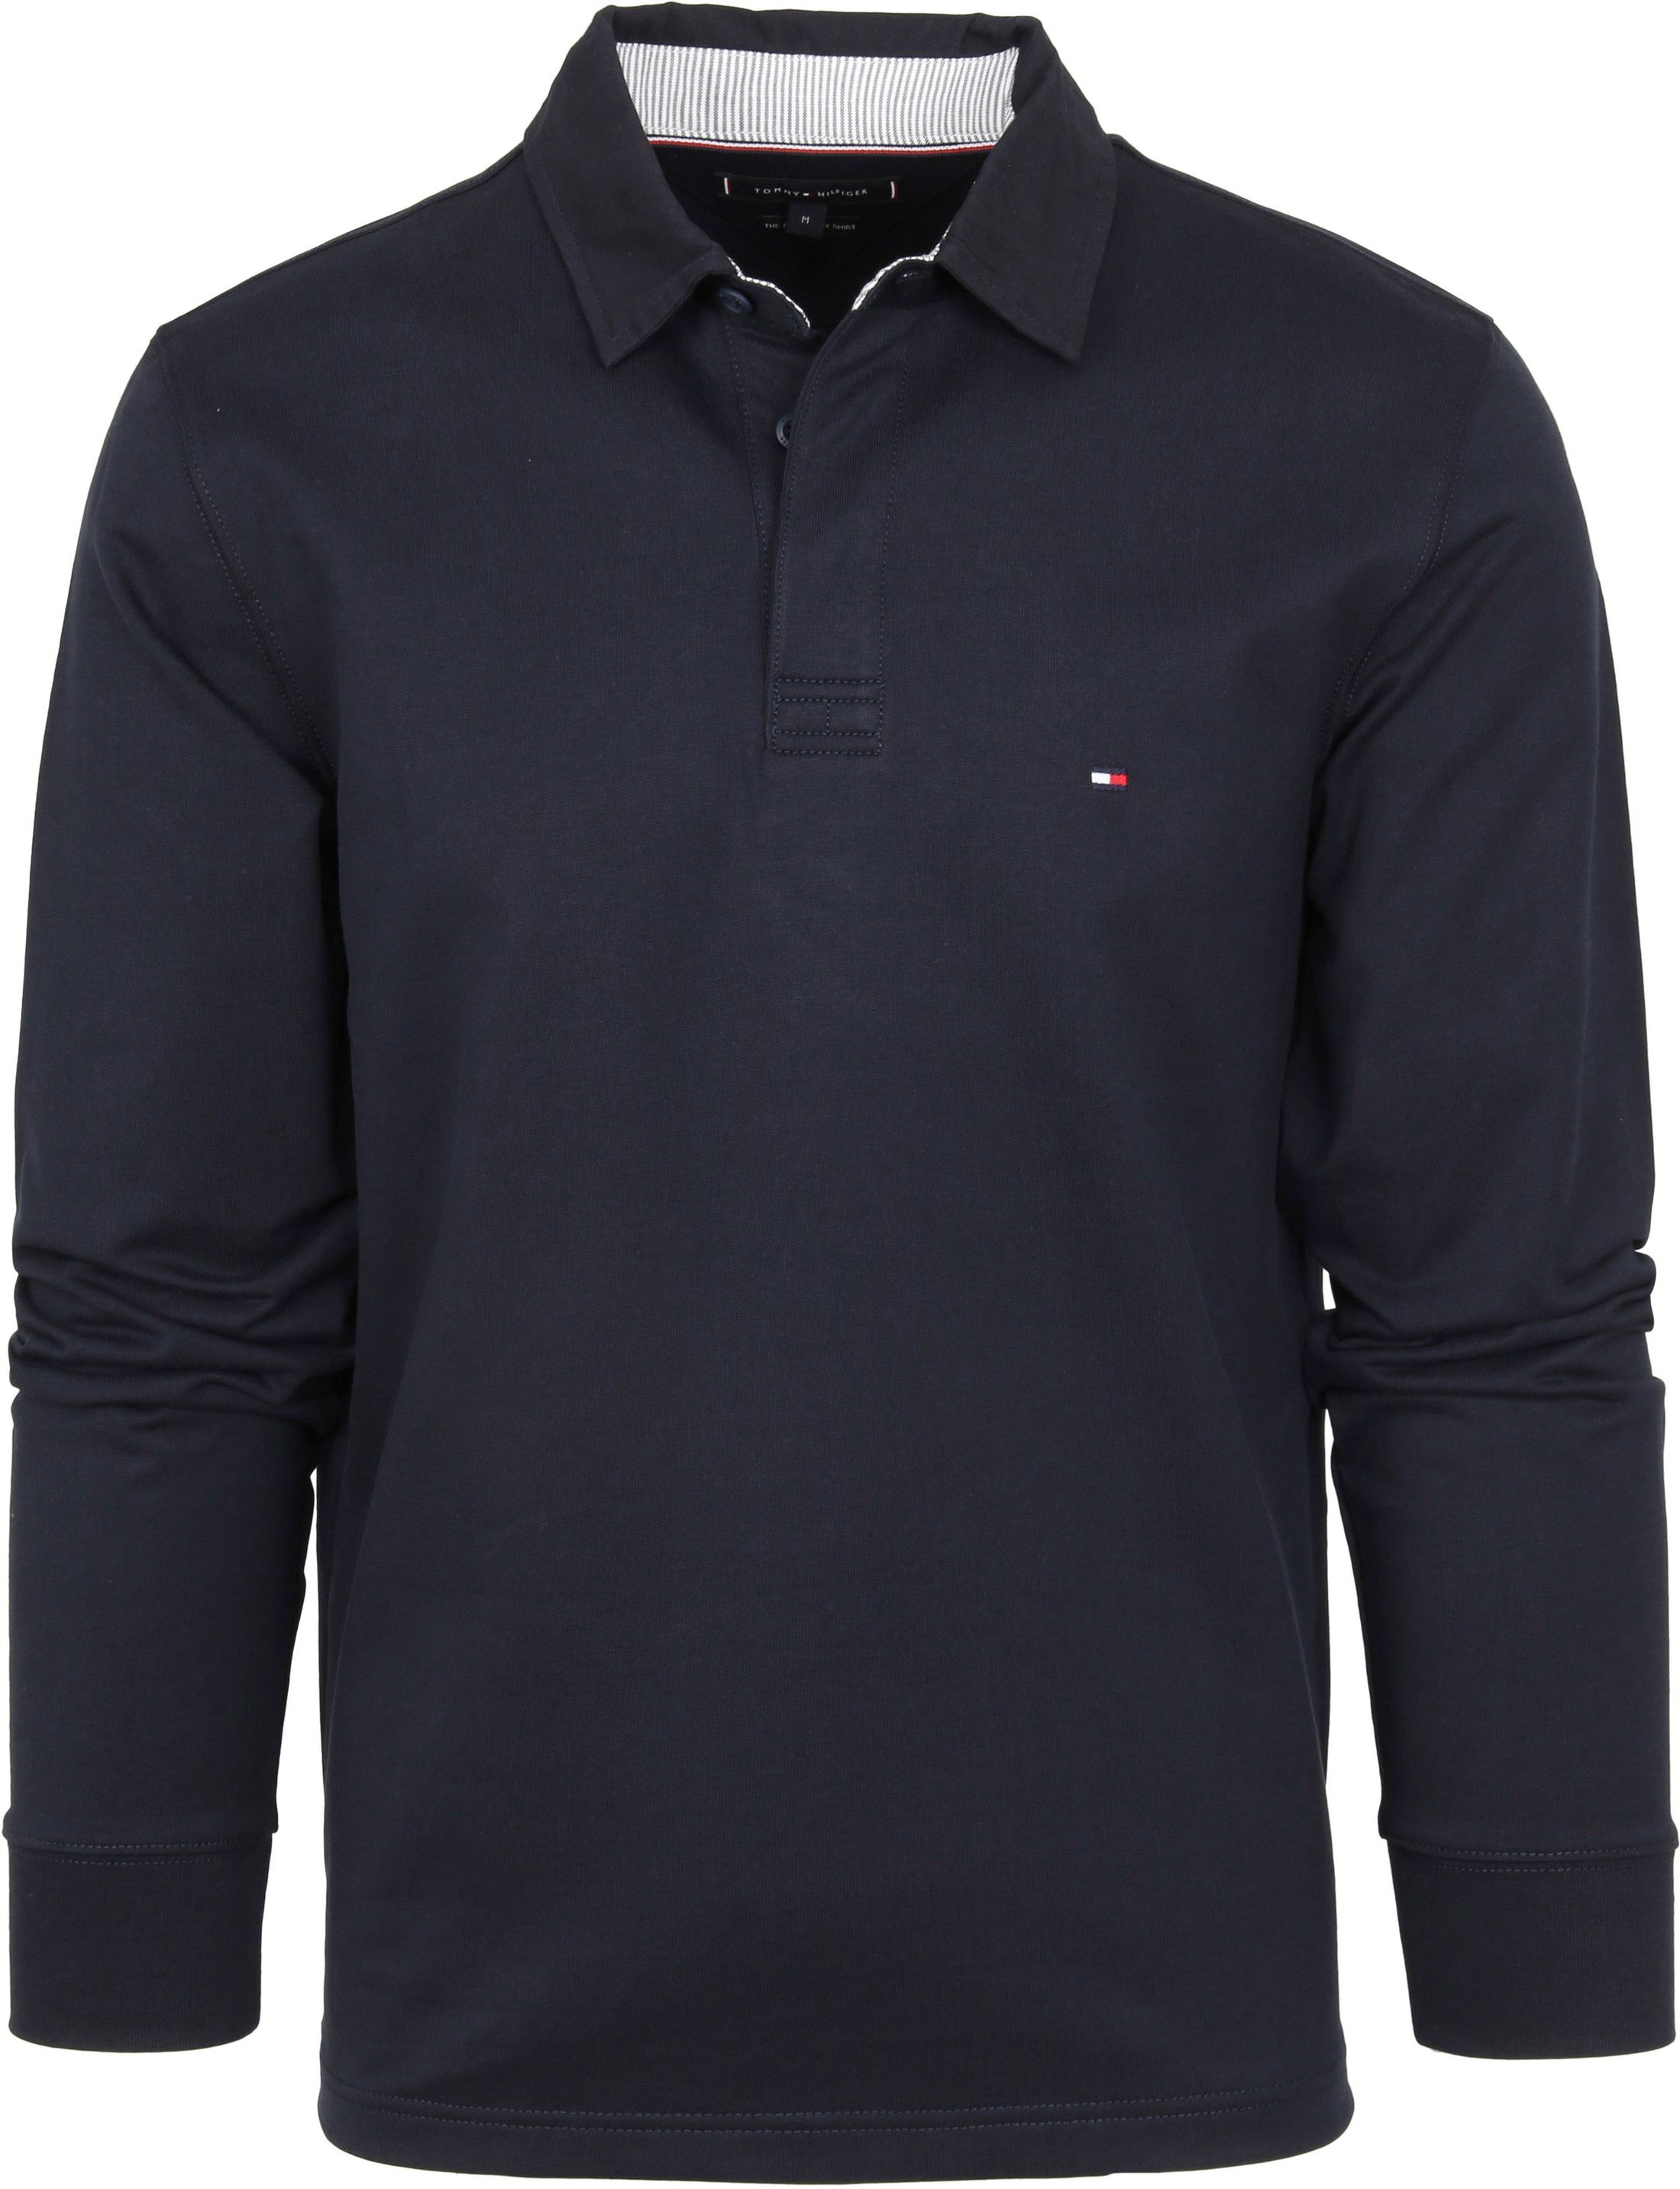 Tommy Hilfiger Rugby Polo Shirt Dark Blue Dark Blue size L